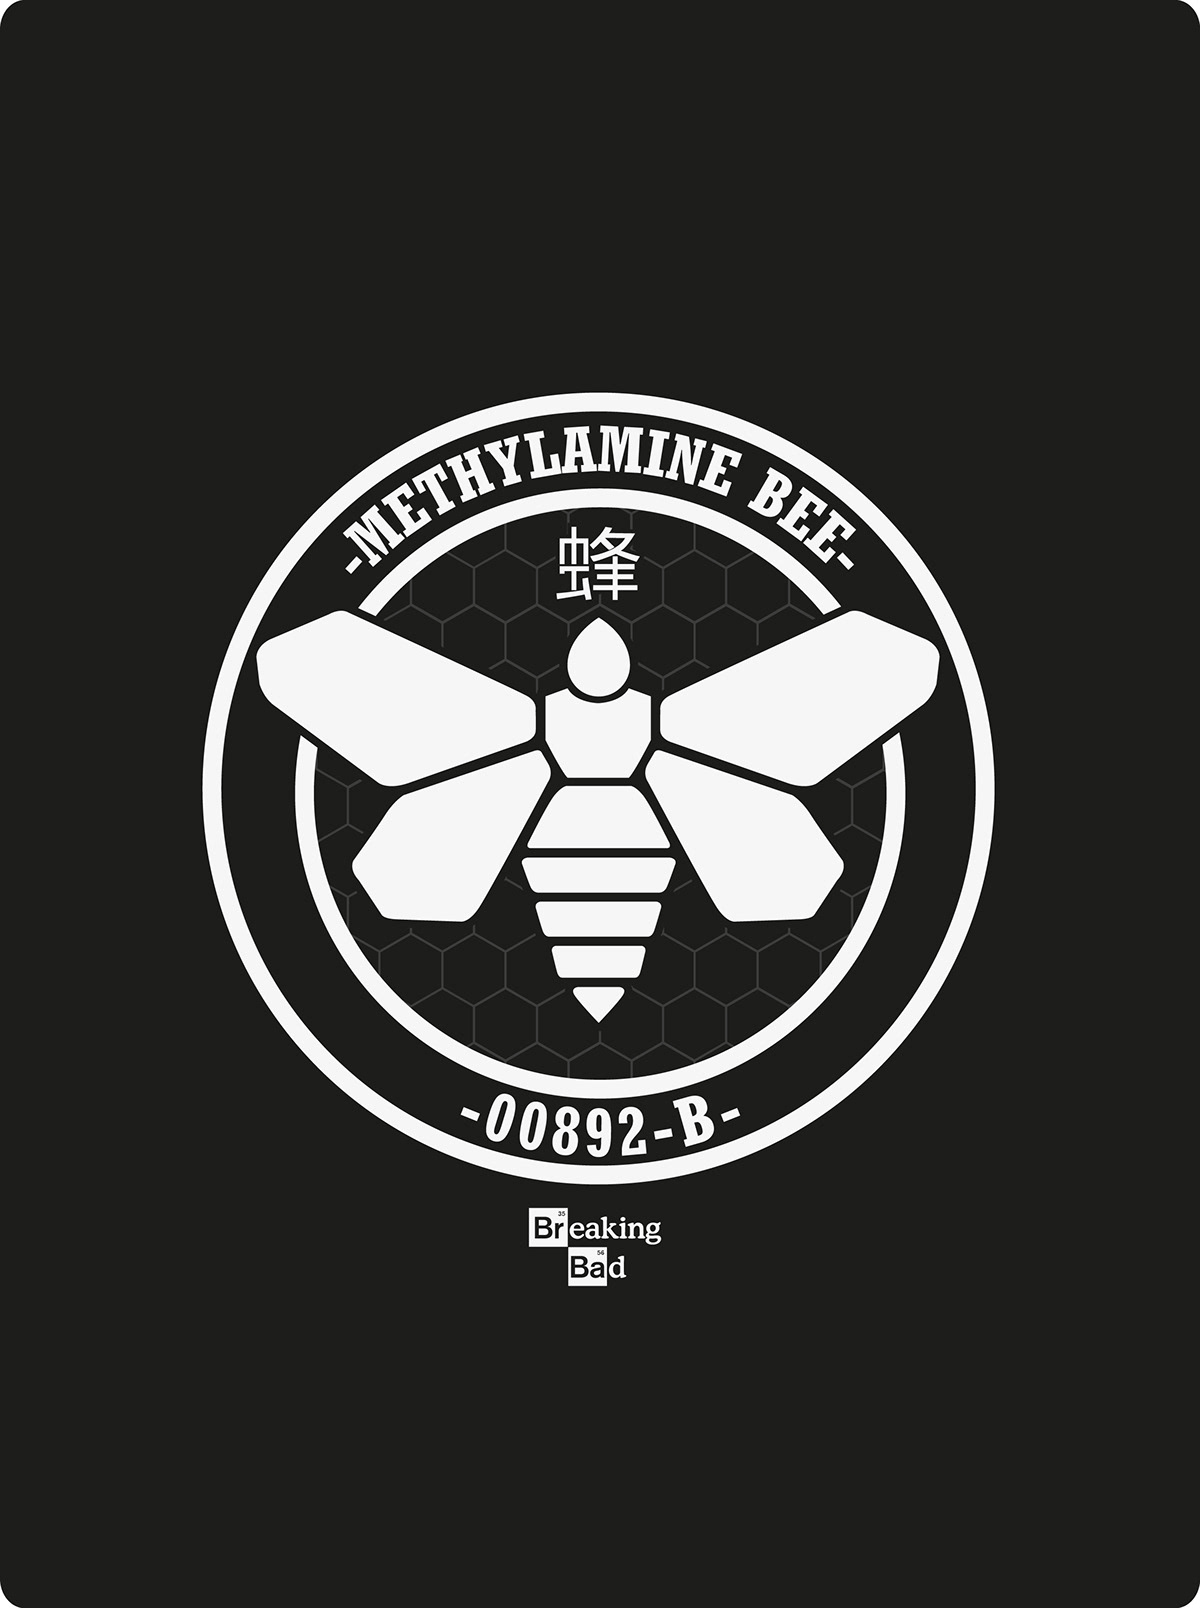 Logotipo ilustracion breaking bad methylamine bee Abeja